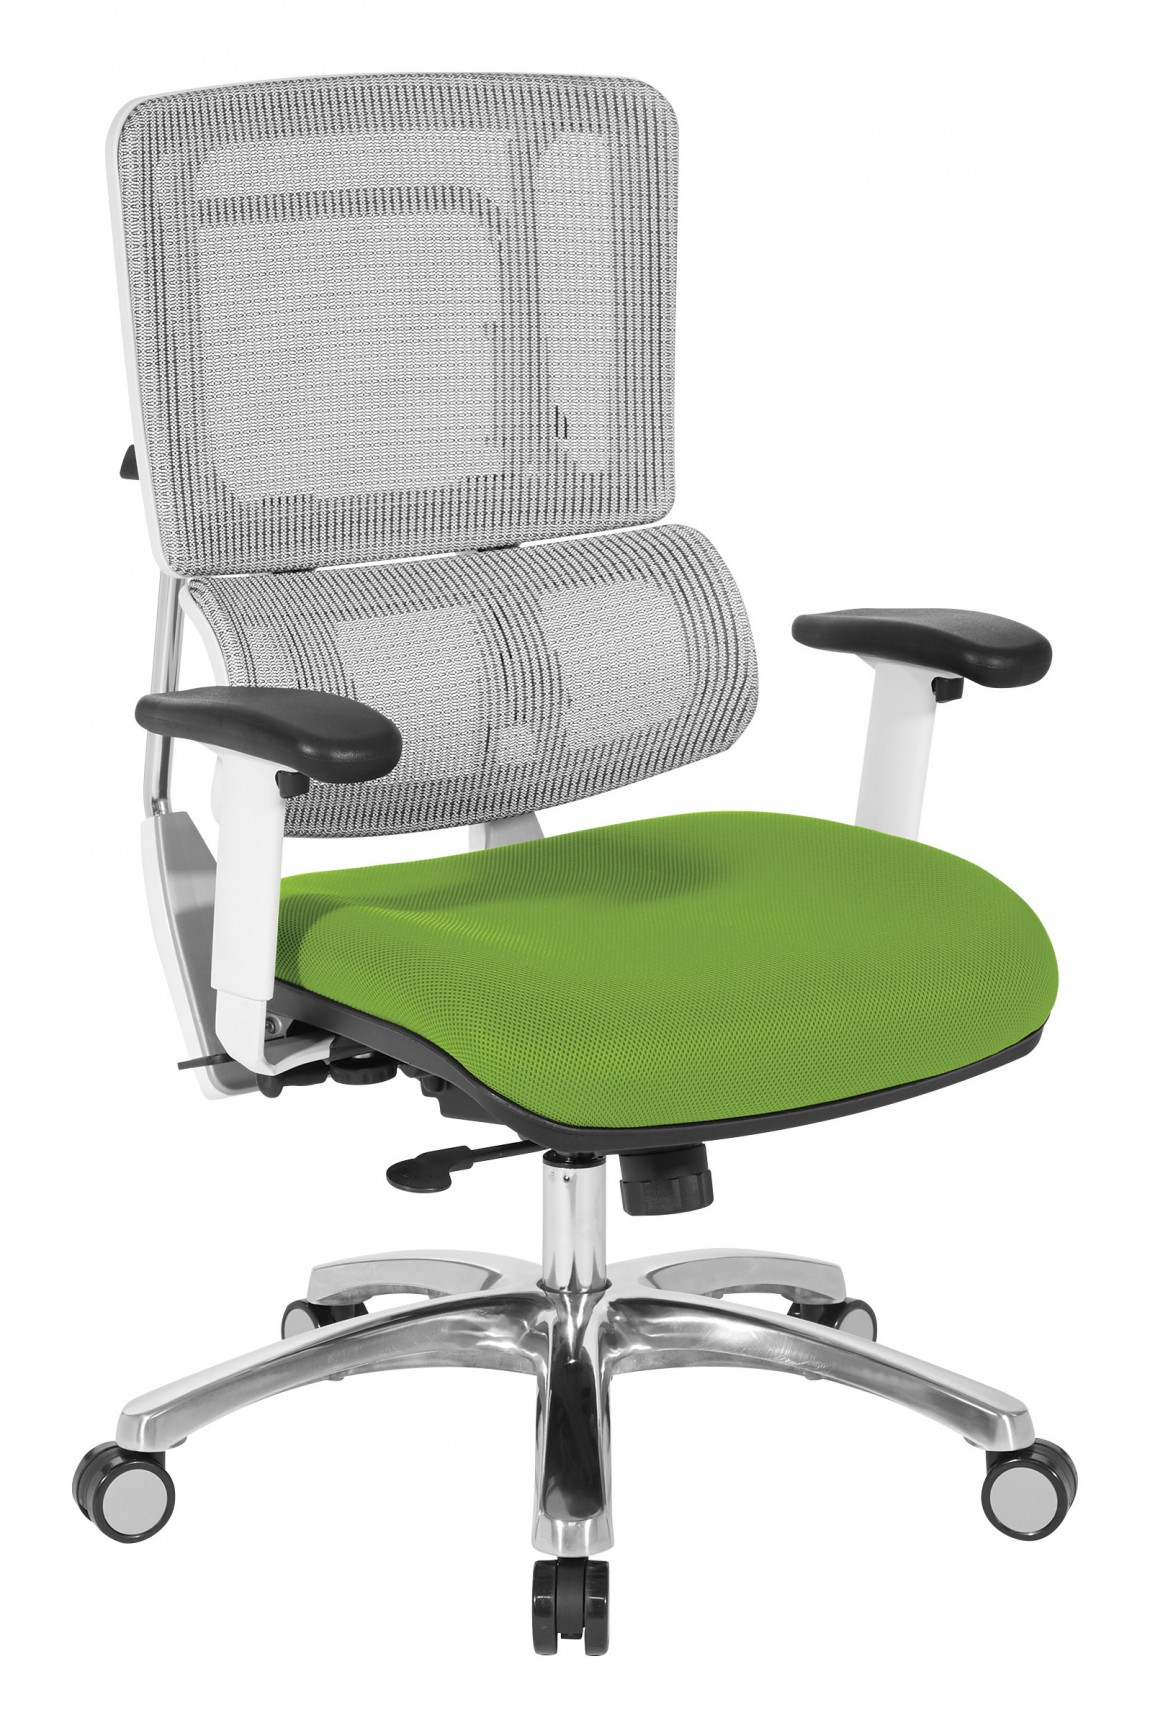 https://madisonliquidators.com/images/p/1150/25832-mesh-back-ergonomic-office-chair-1.jpg